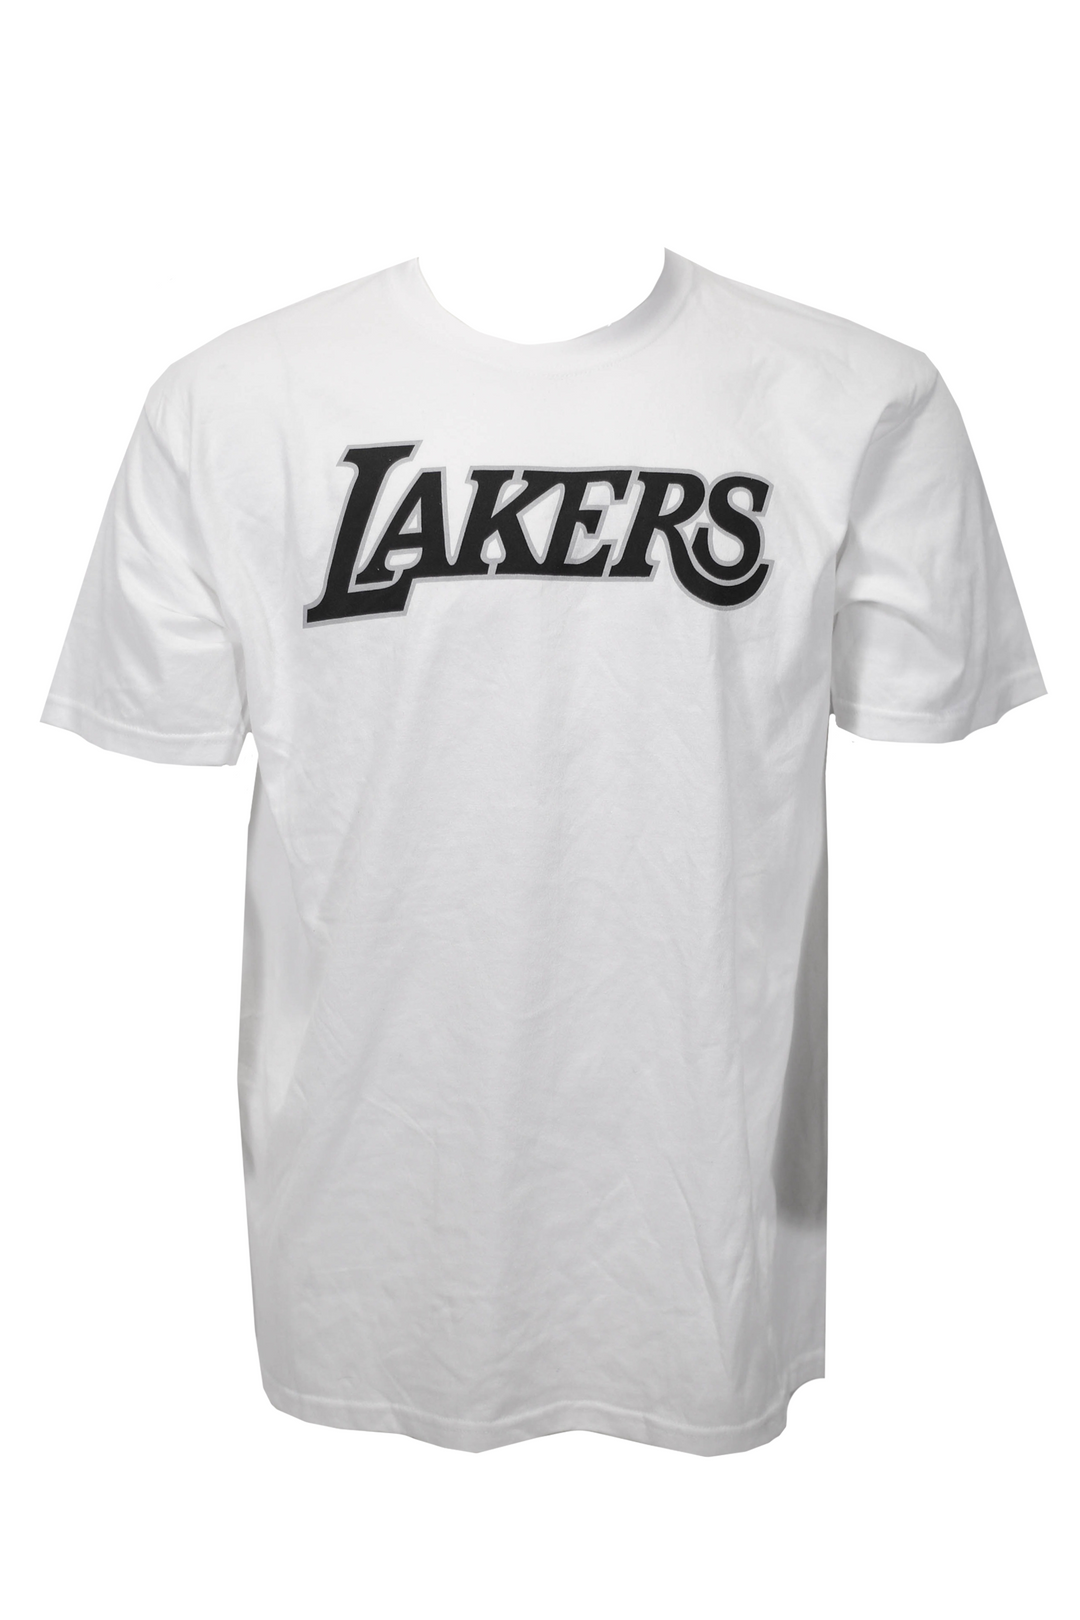 Logo Crew Neck Los Angeles Lakers Tee - Lakers Store